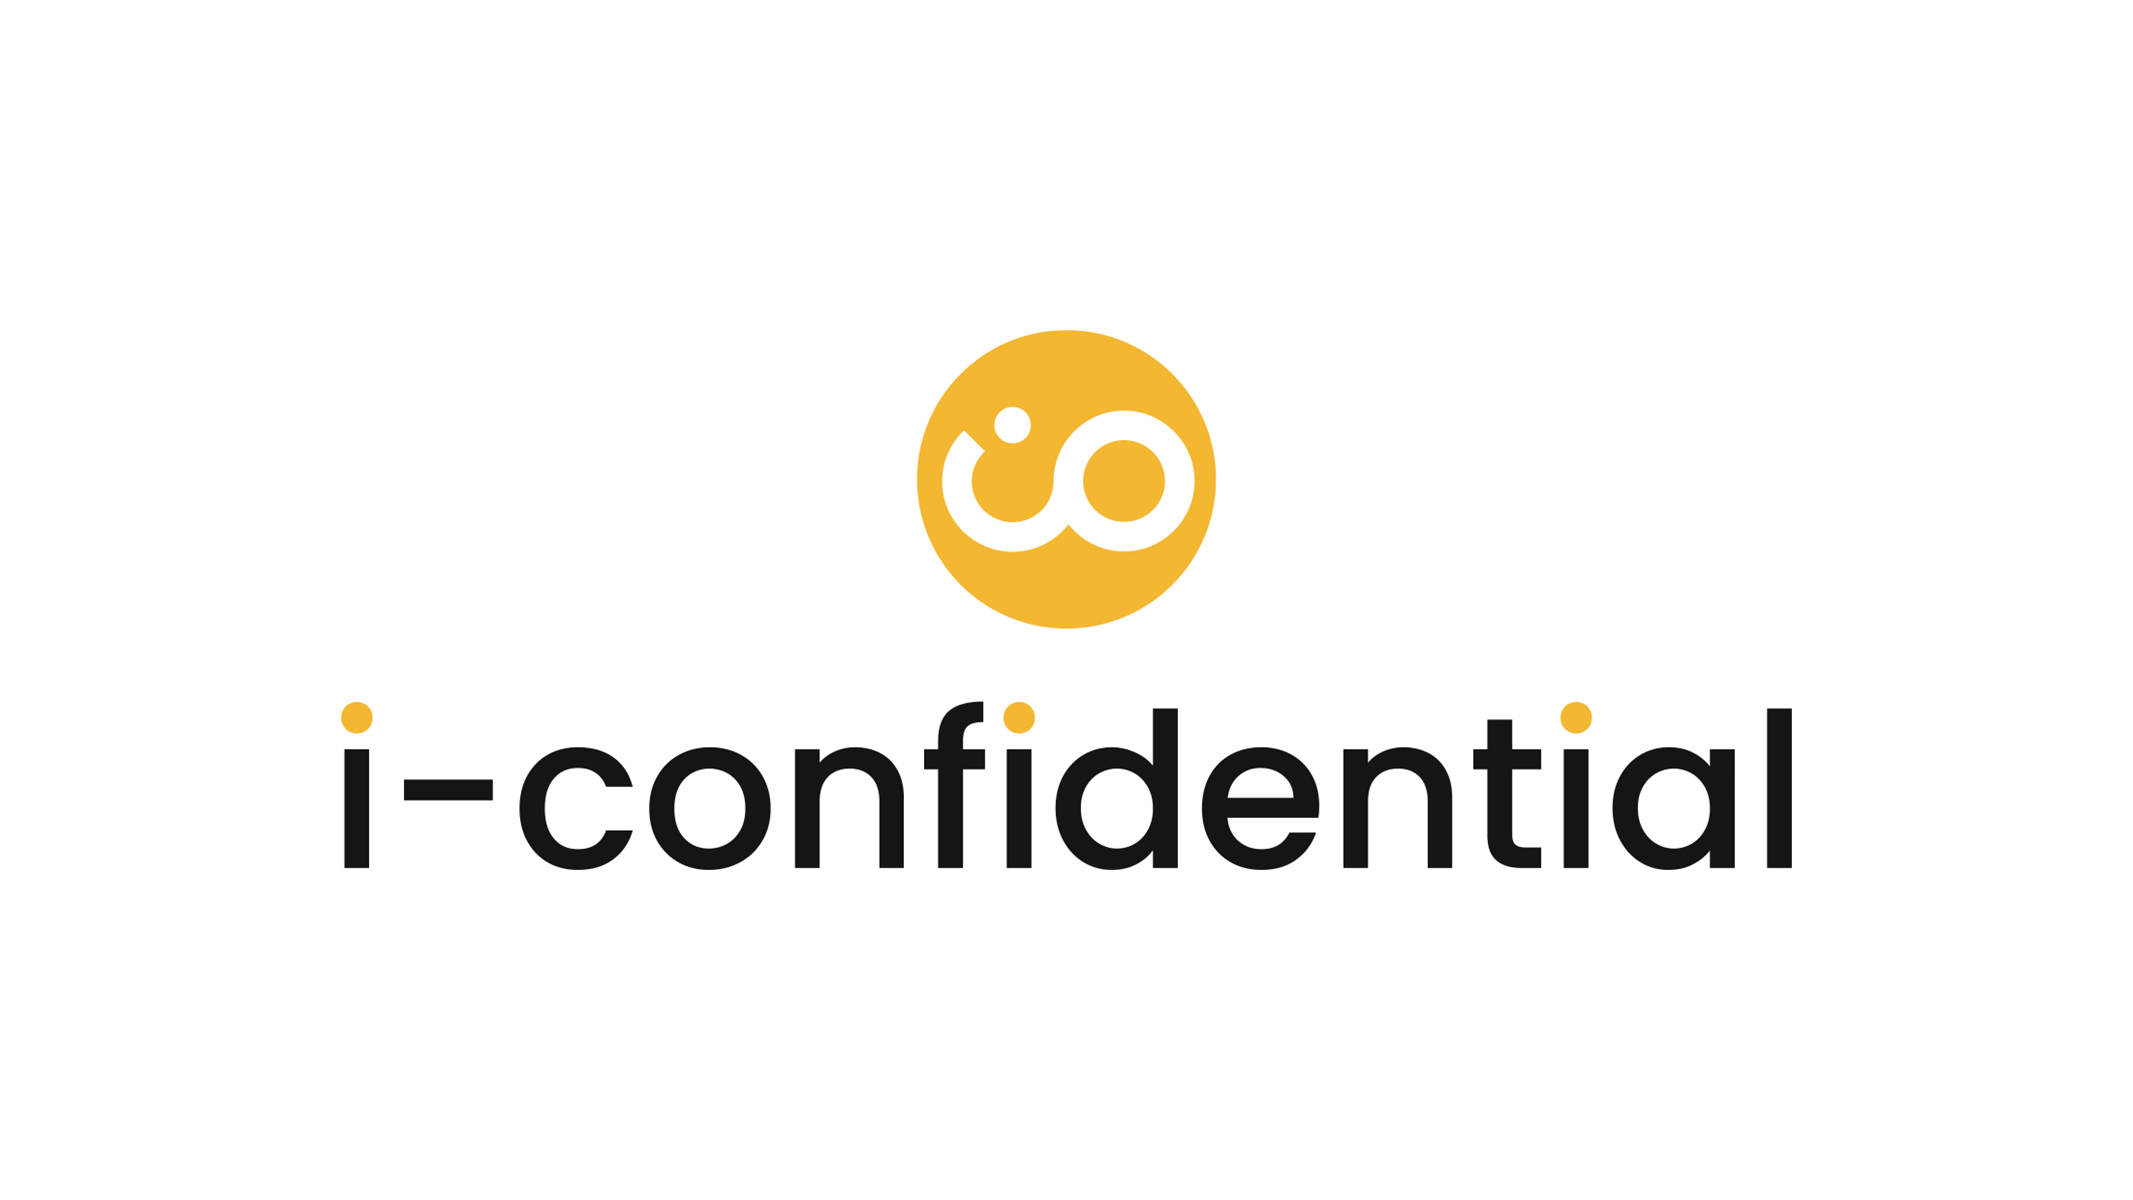 i-confidential Logo.png